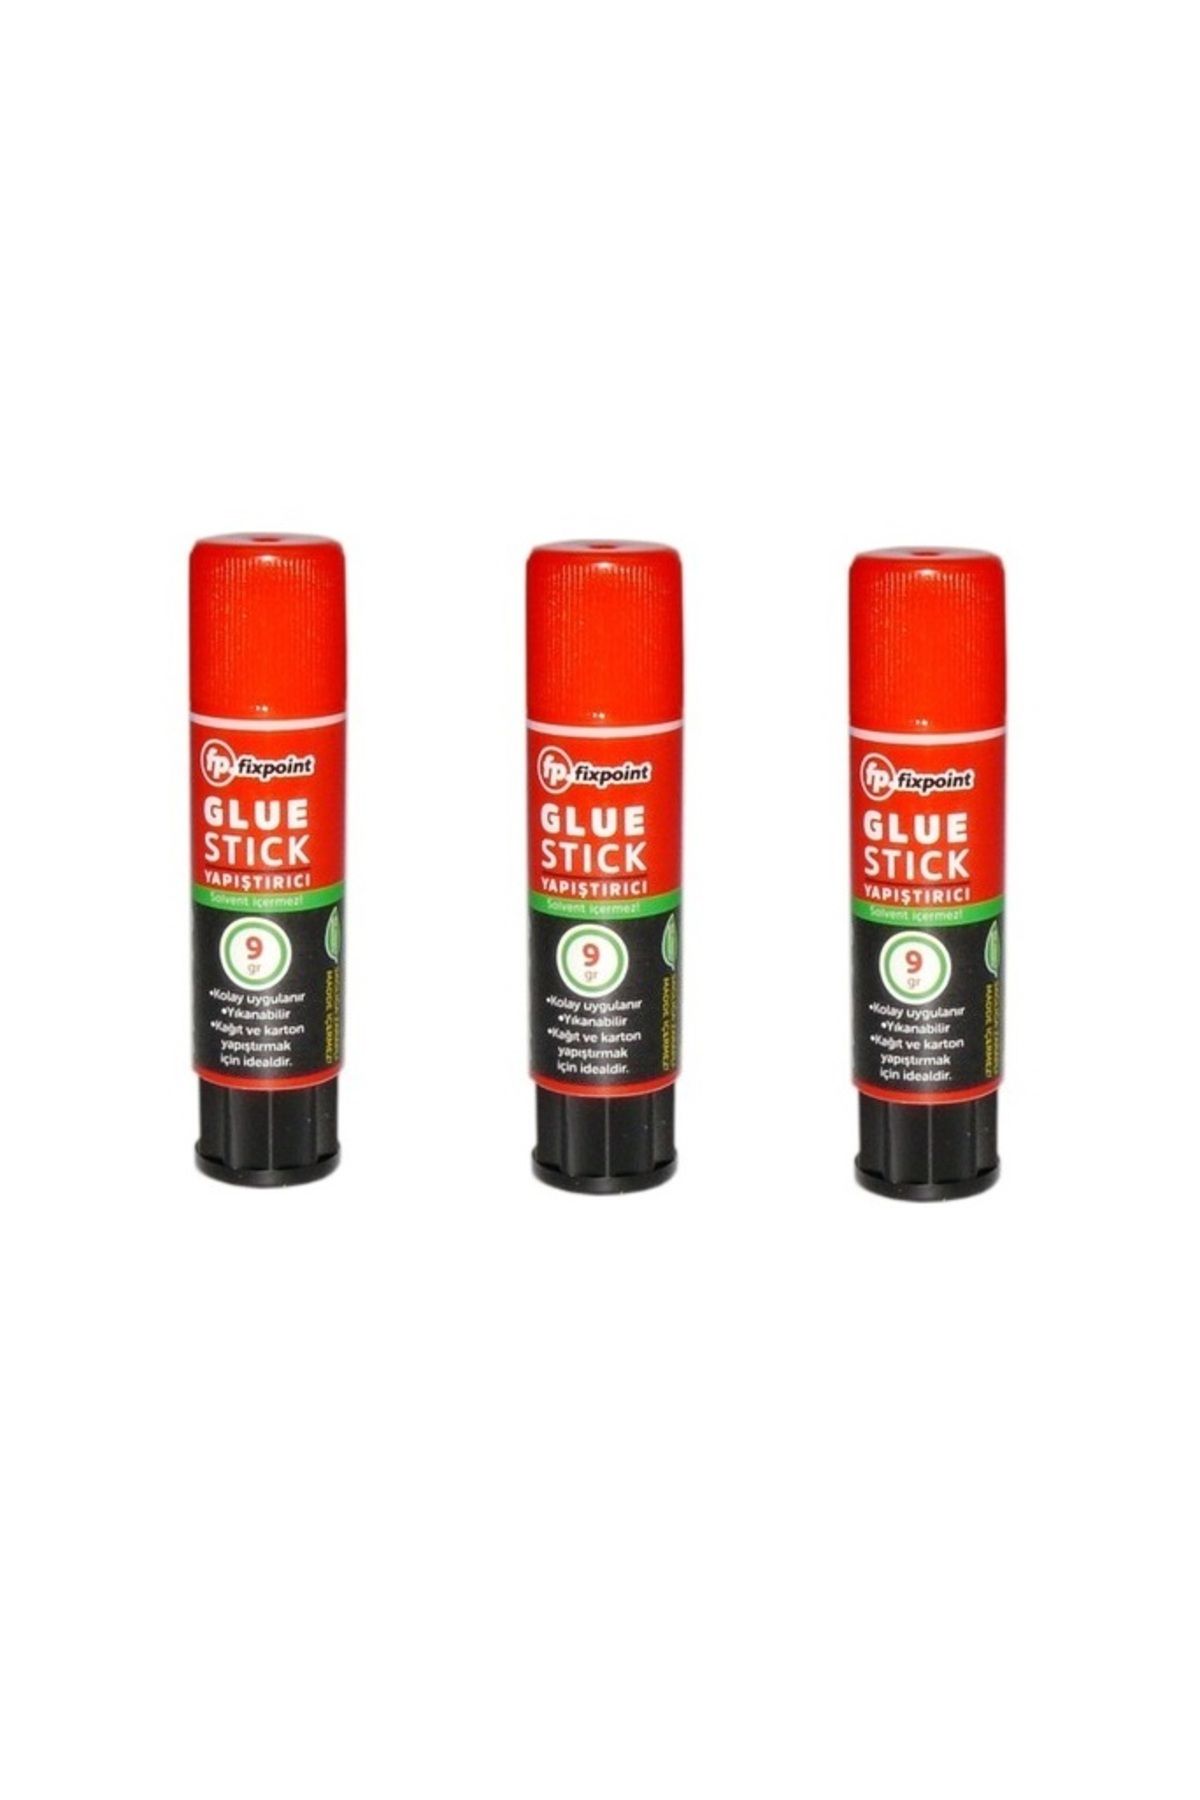 FixPoint Glue Stick Yapıştırıcı 9gr (3 Adet)